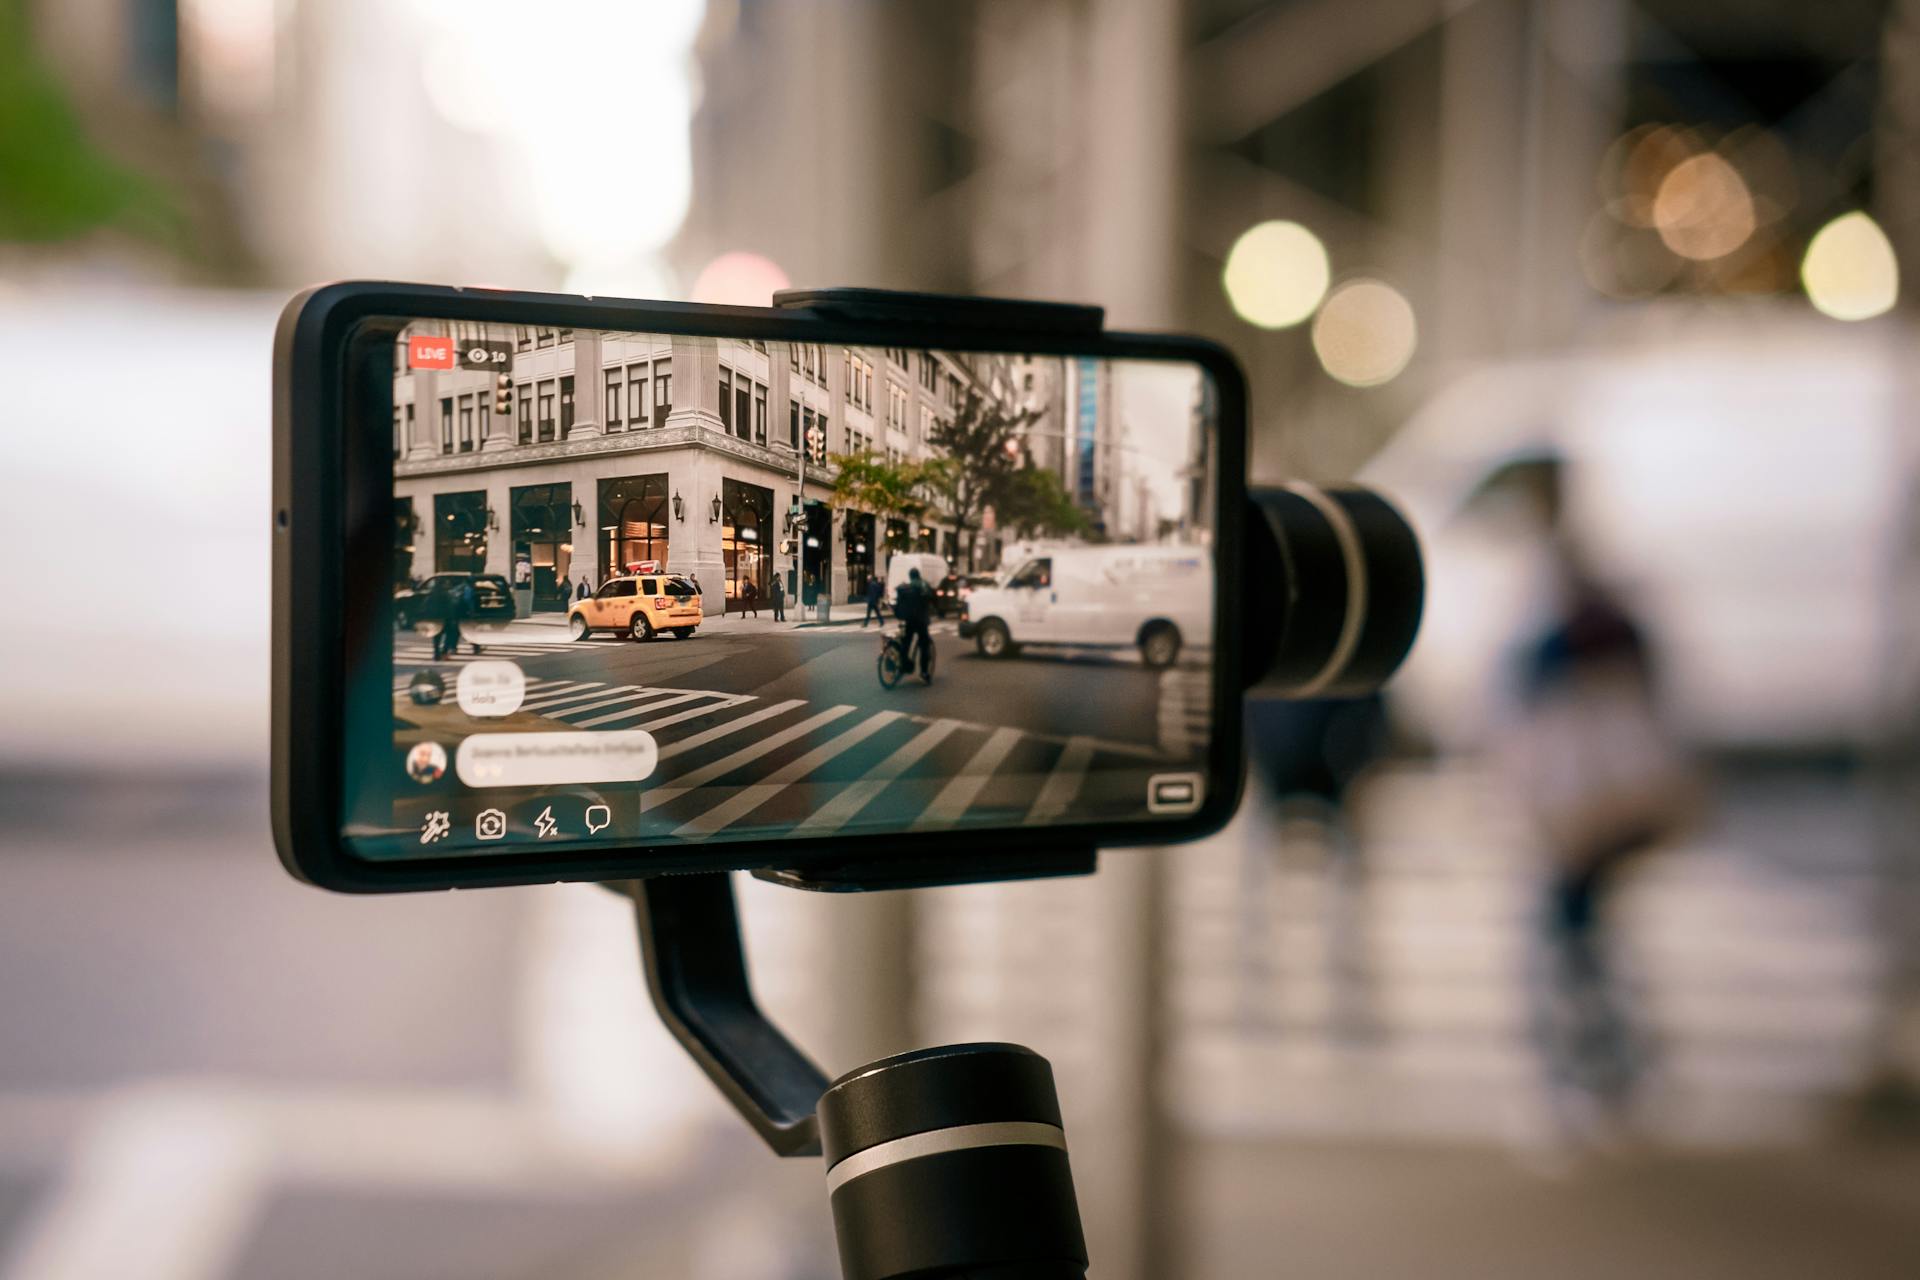 A live video of a street filmed through a mobile phone